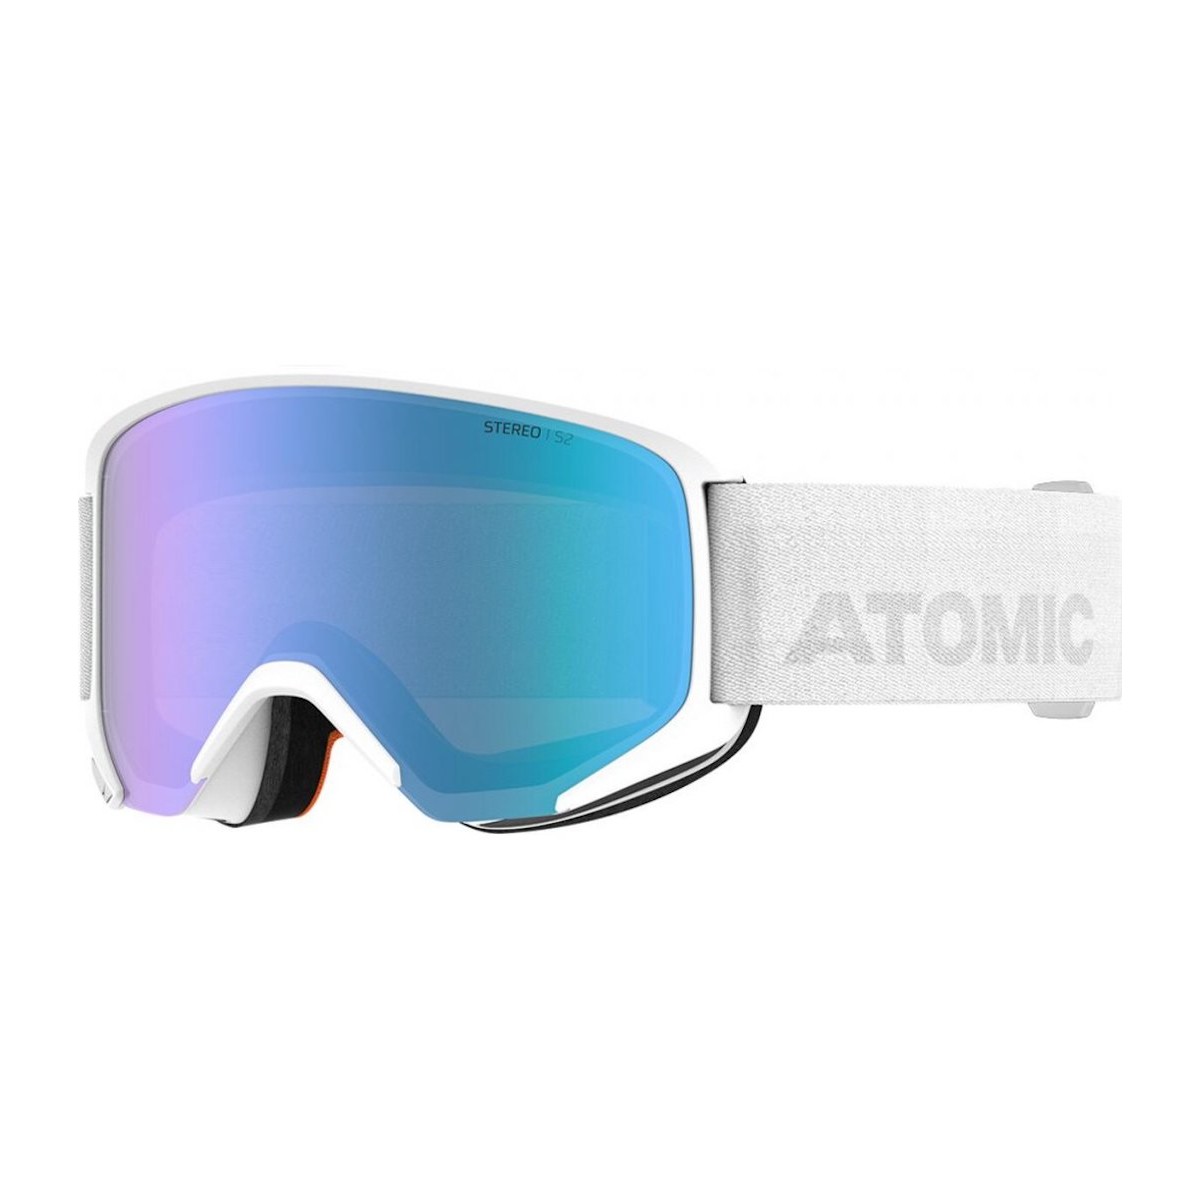 ATOMIC SAVOR STEREO W/BLUE ST C2 goggles - white